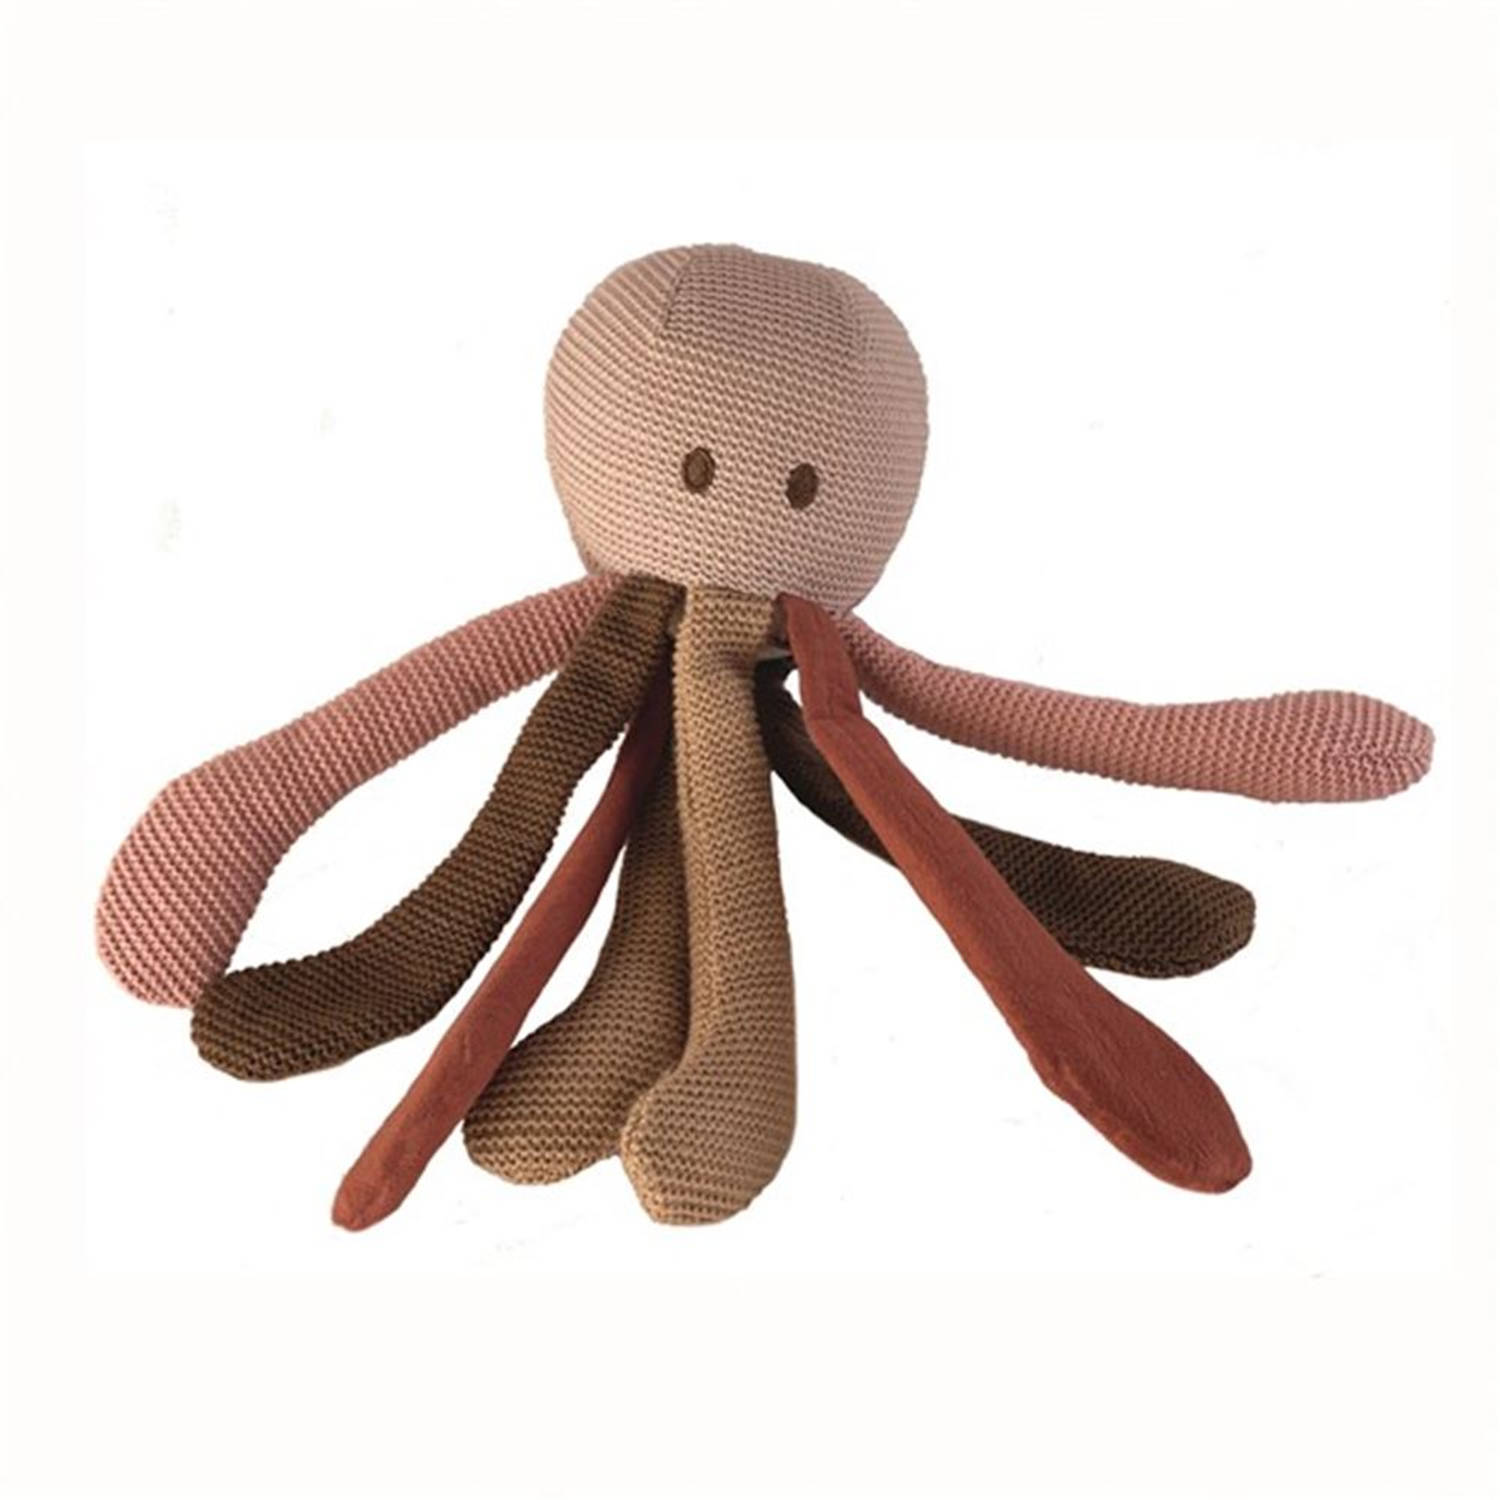 Egmont Toys Knuffel:ebreide octopus 25cm